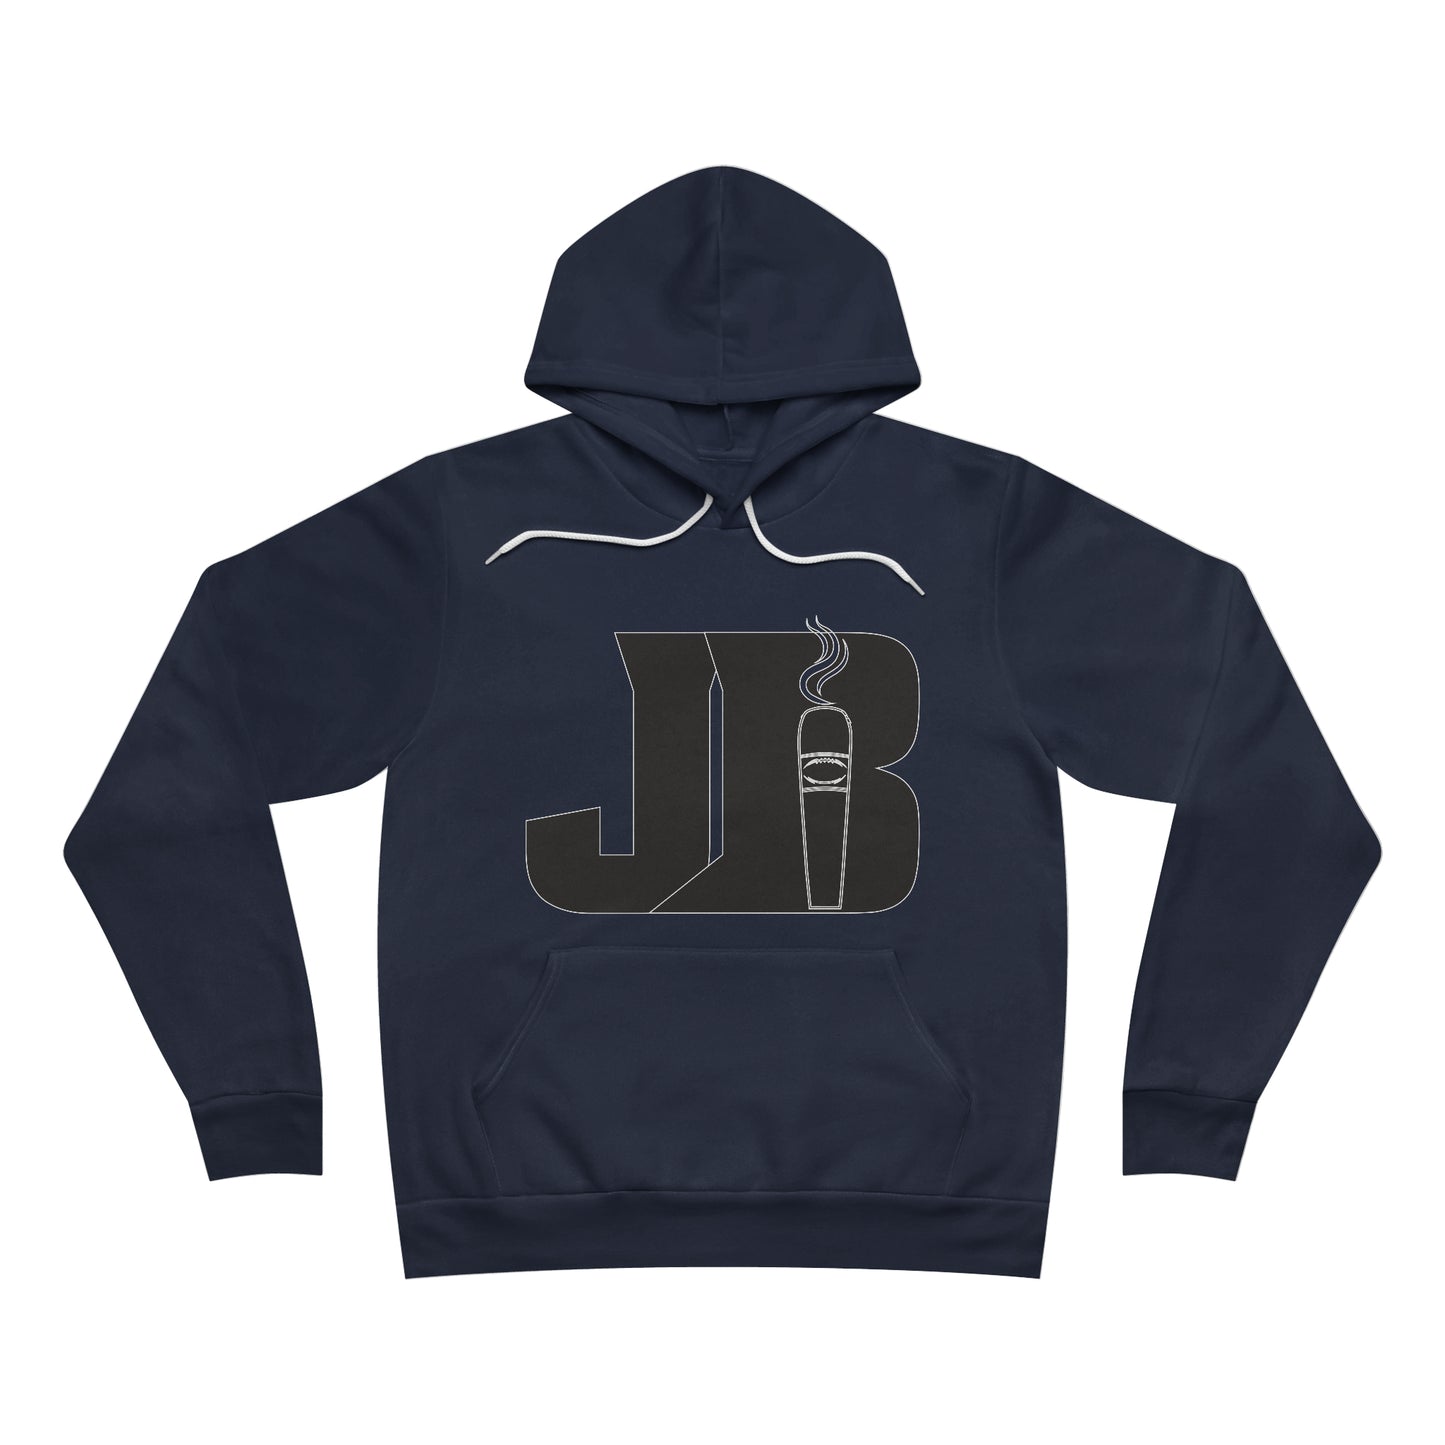 JB Talk That Talk Unisex Heavy Blend™ Full Zip Hooded Sweatshirt